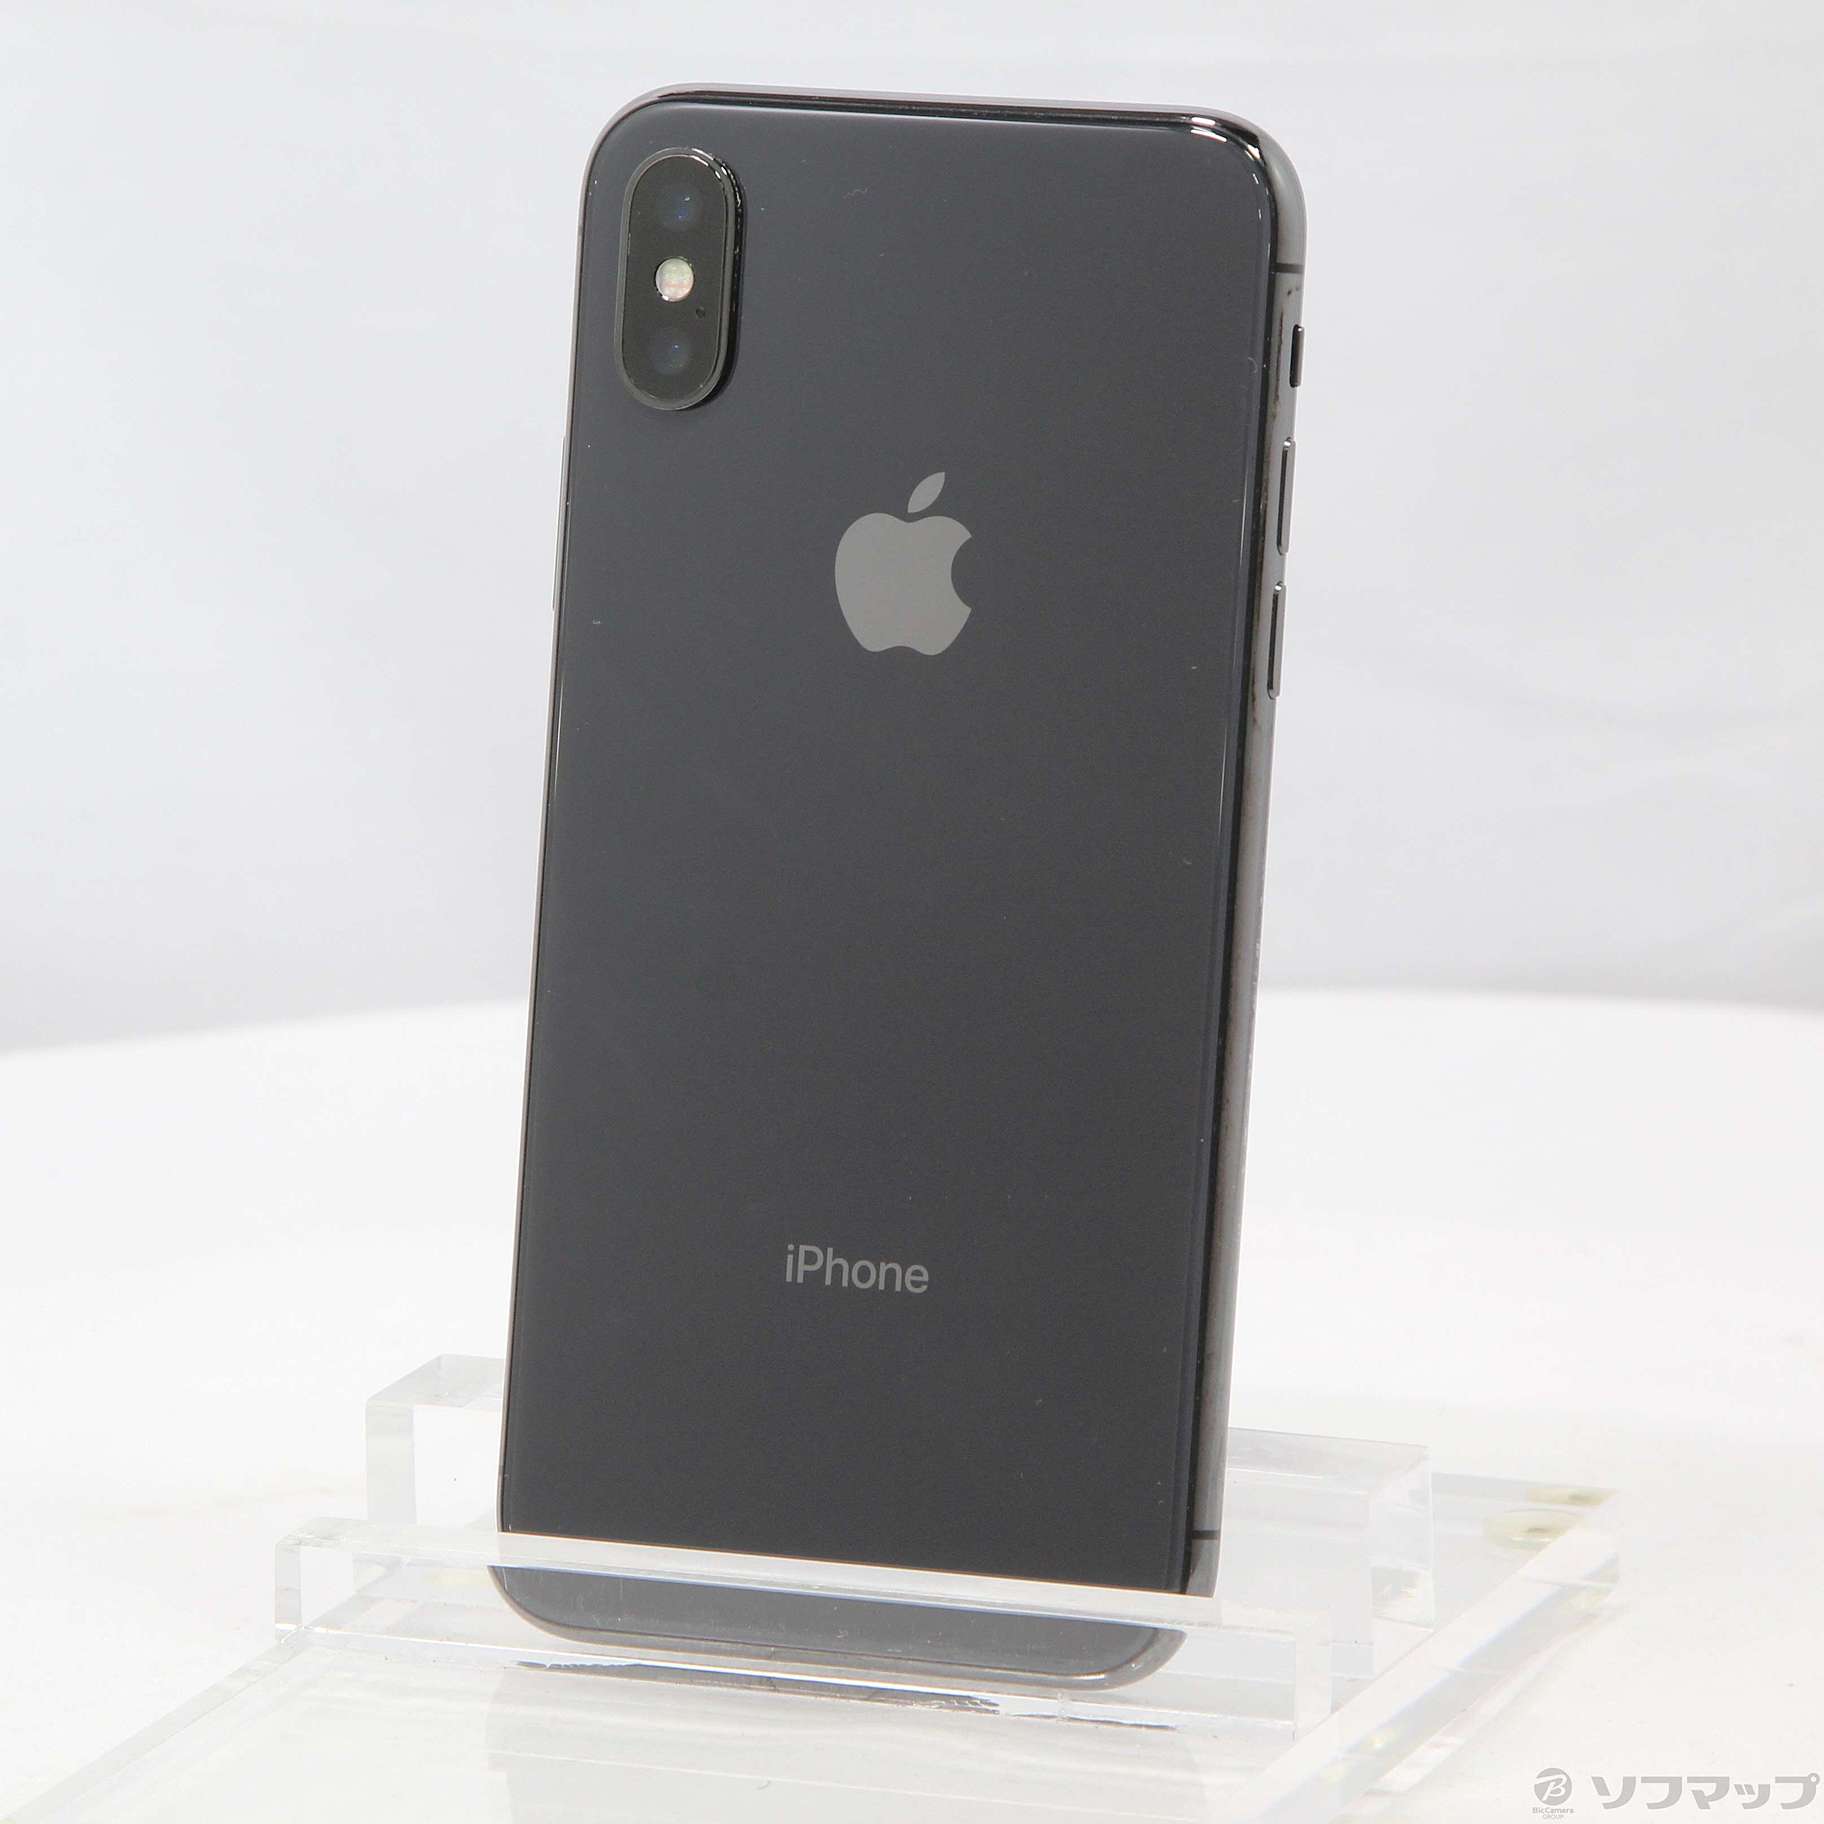 iPhone X スペースグレイ 64GB SIMフリー 美品 - スマートフォン本体